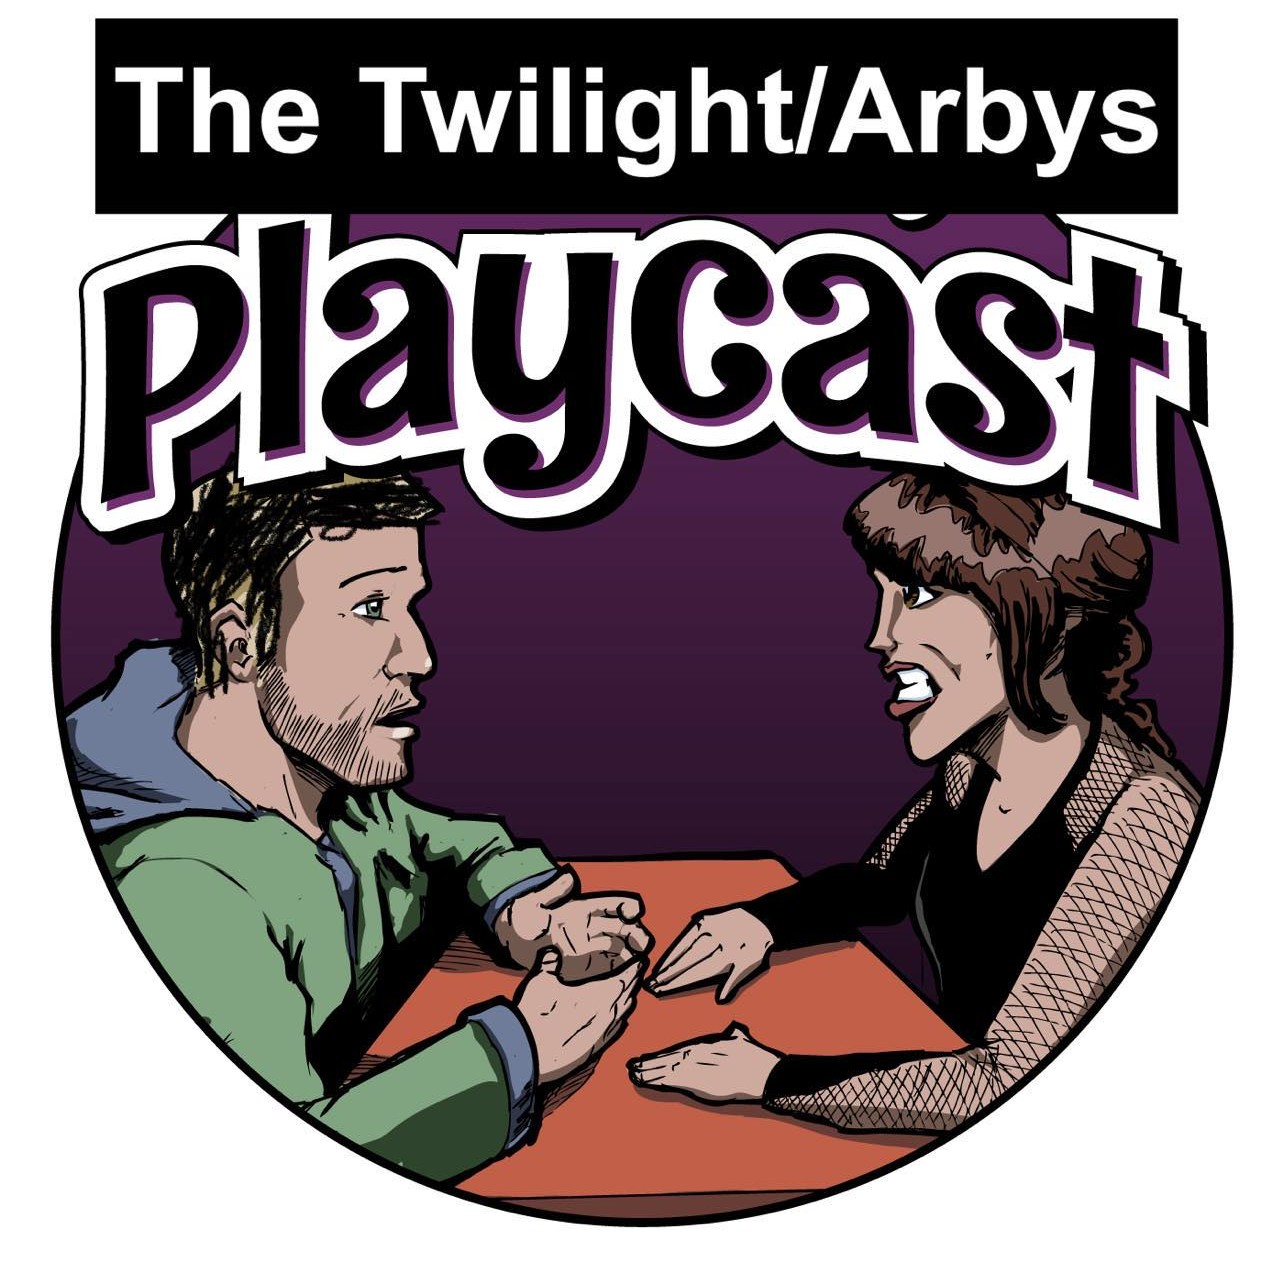 The Twilight/Arbys Playcast